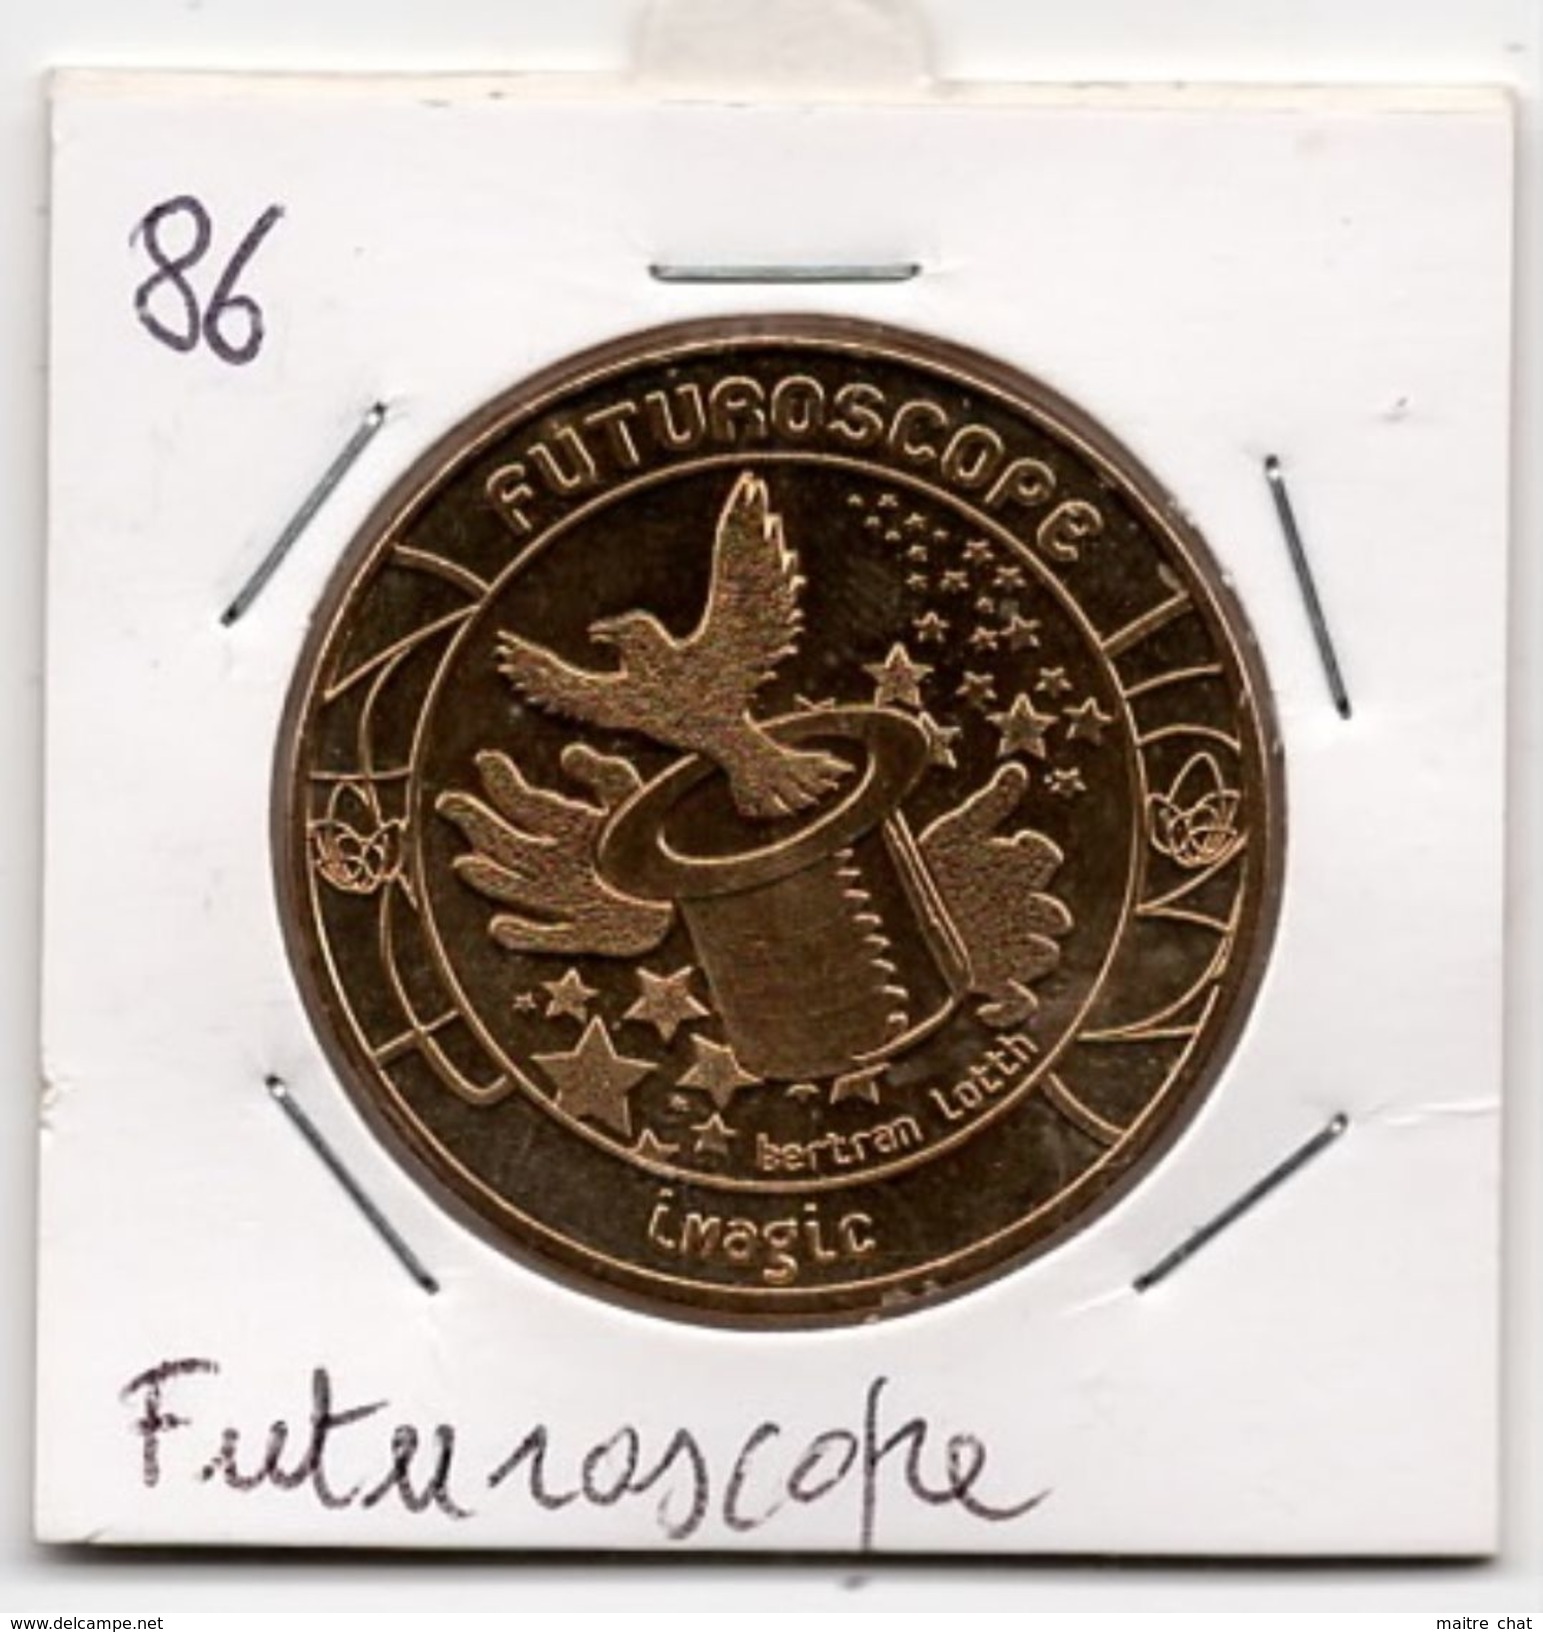 Futuroscope - 86 : Imagic (Monnaie De Paris, 2013) - 2013